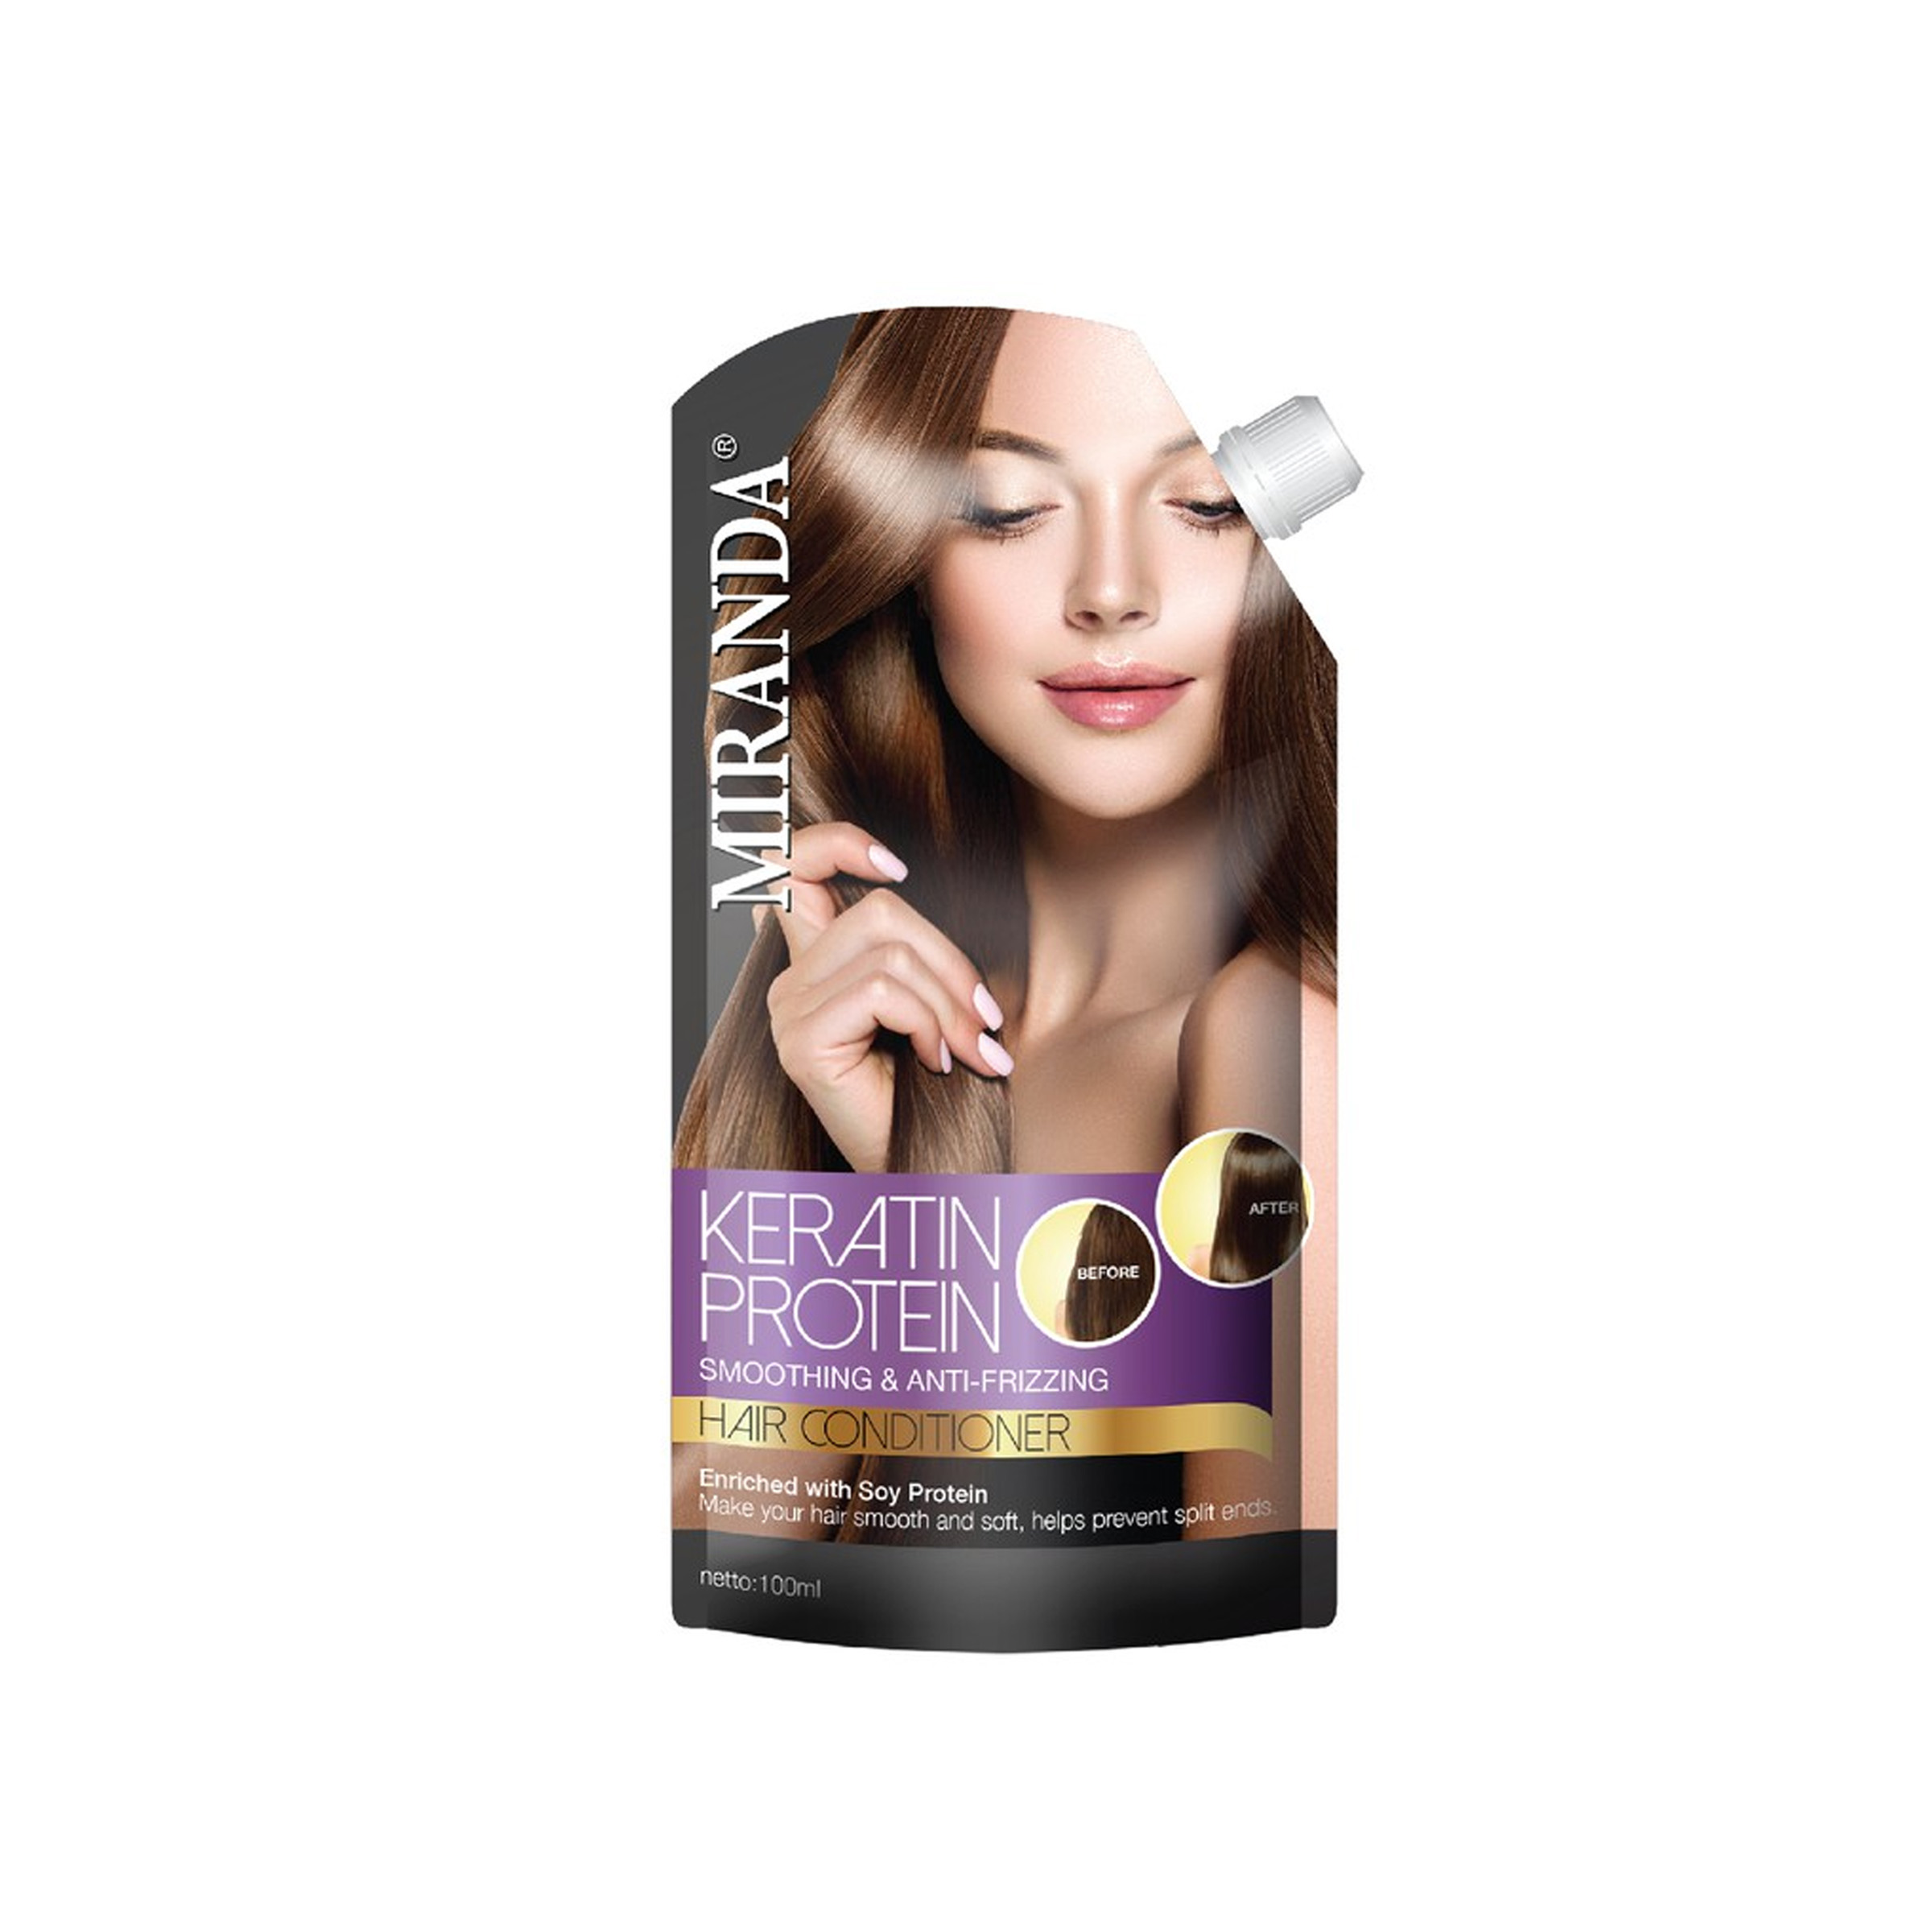 Miranda Keratin Protein Hair Conditioner 100 ml / Kondisioner Protein